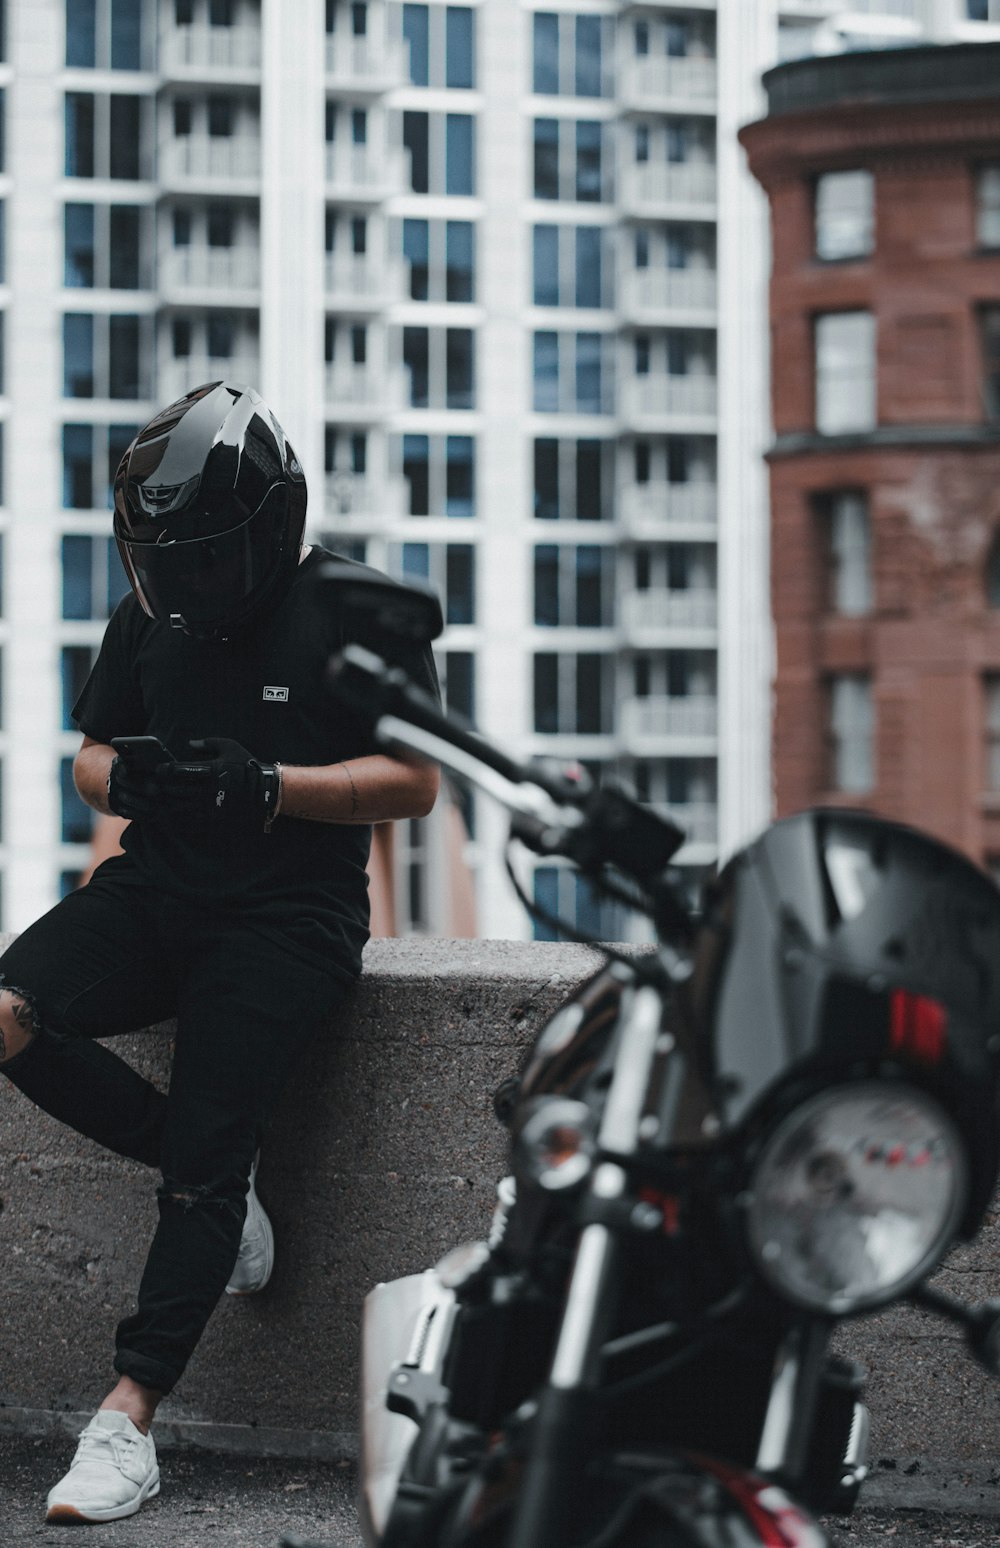 man in black jacket and gray pants wearing black helmet riding motorcycle  during daytime photo – Free Helmet Image on Unsplash